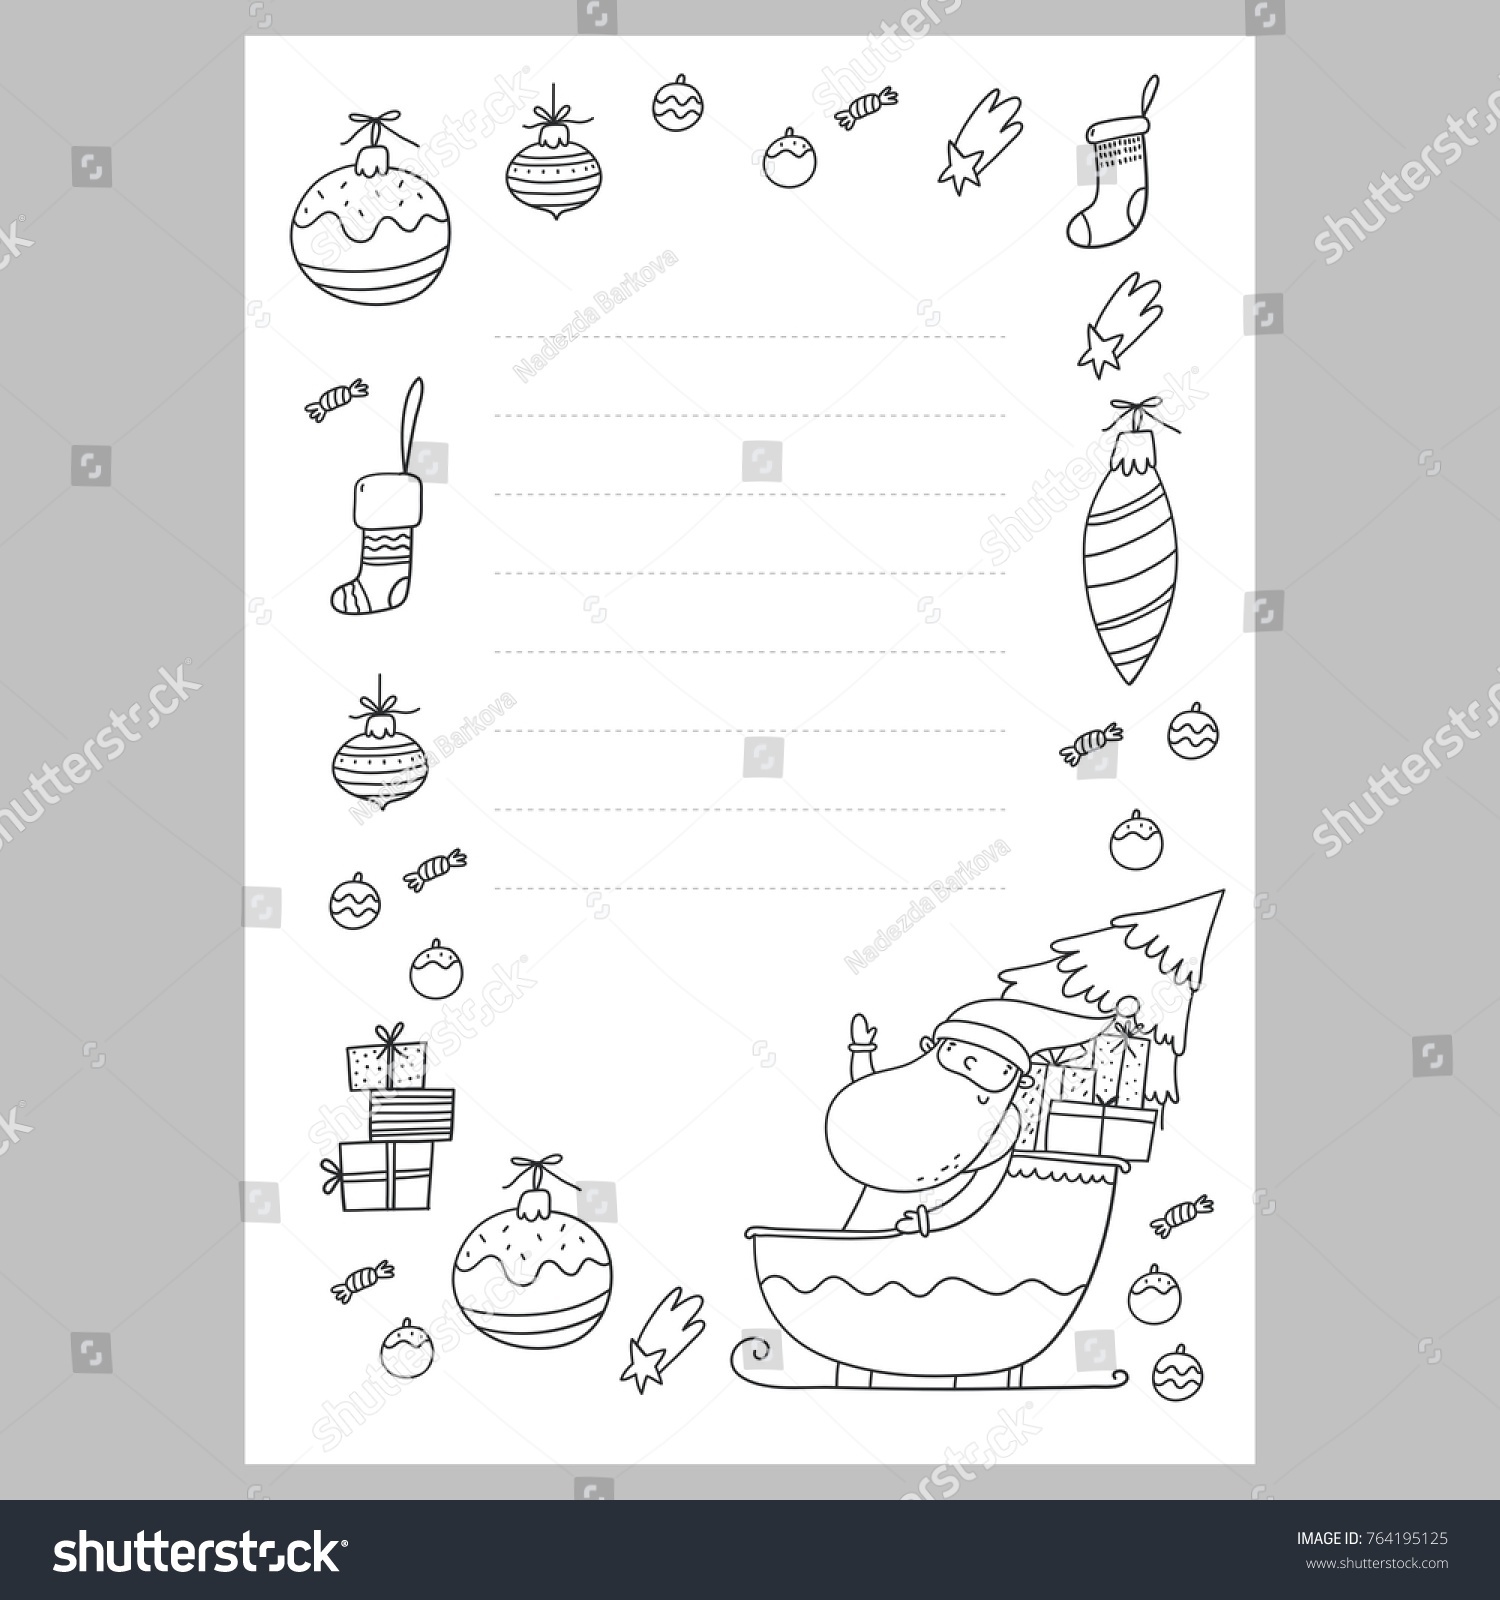 Christmas coloring page christmas wish list stock vector royalty free